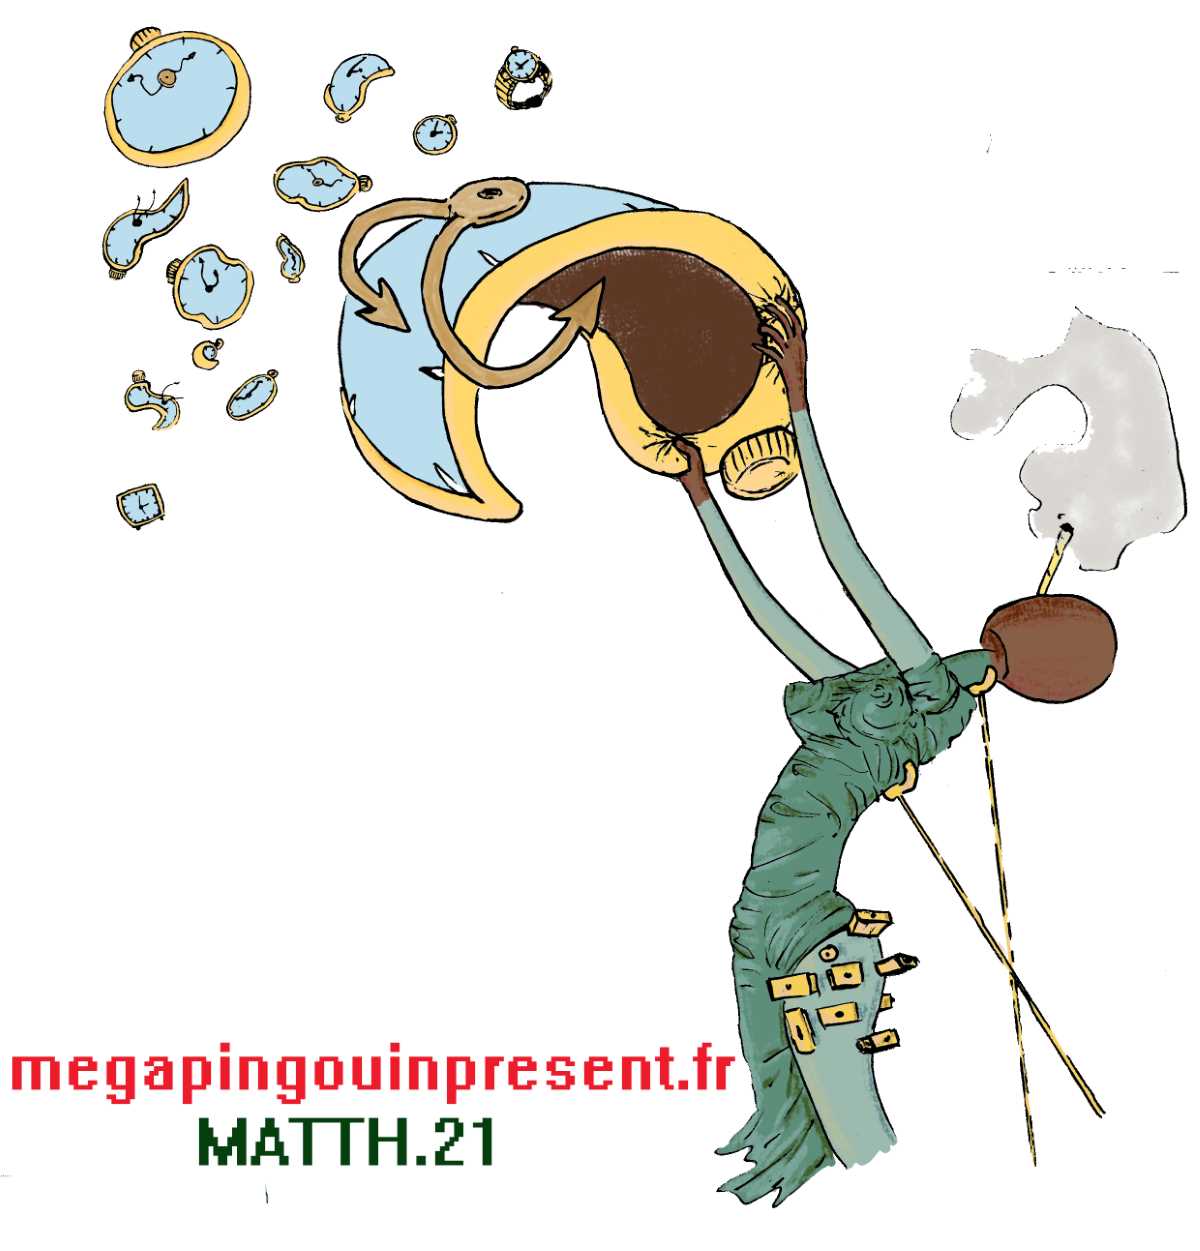 megapingouin-present-illustrations-calice-club-Dali-giraf-propag